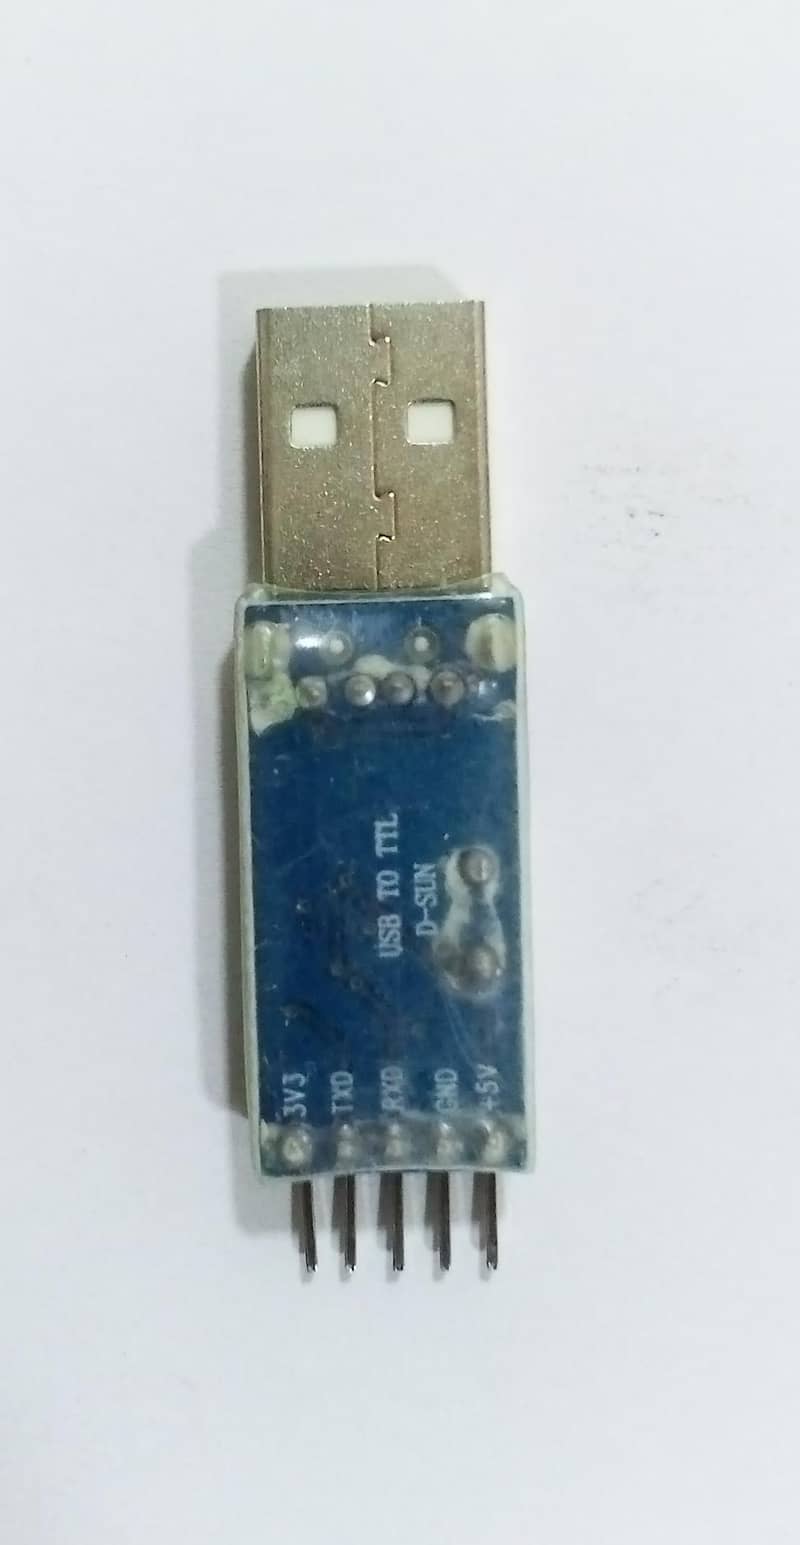 PL2303 USB to TTL Serial Converter Price In Pakistan 0